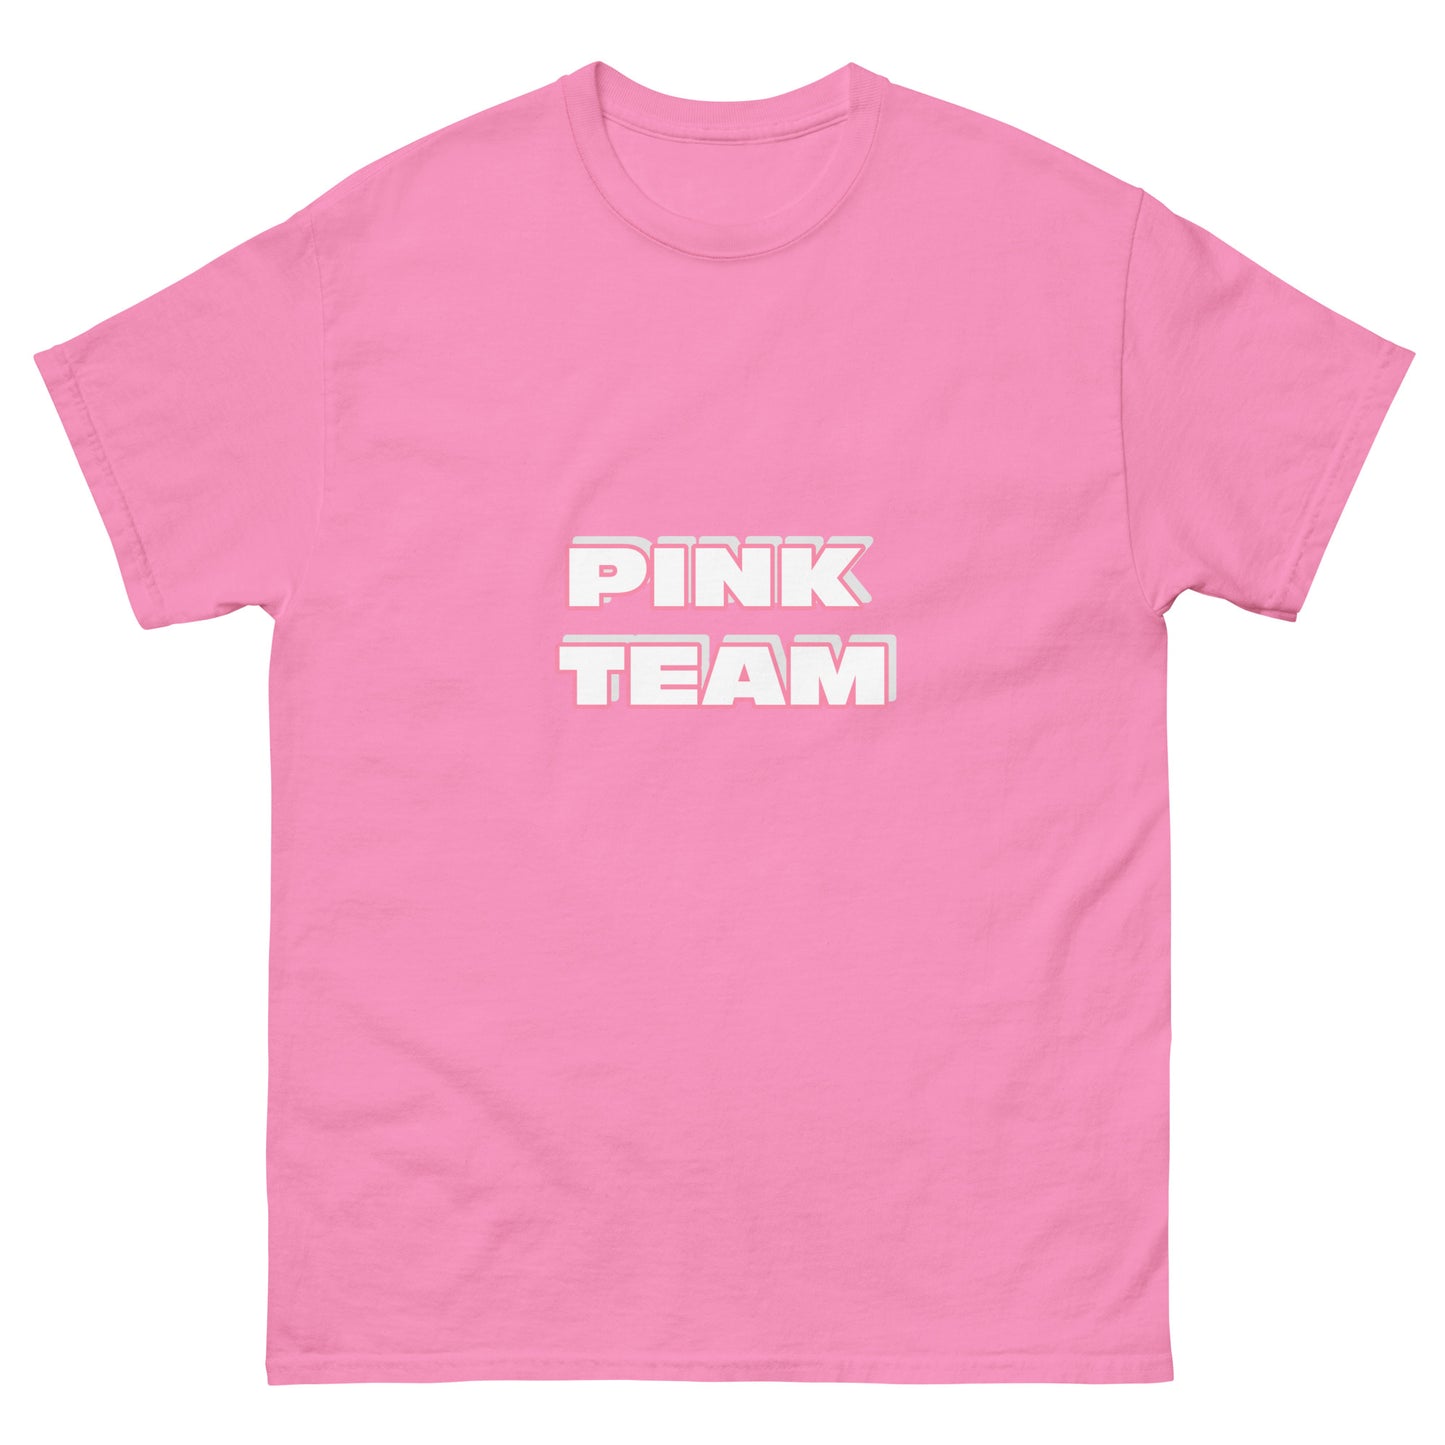 Pink Team Classic Tee